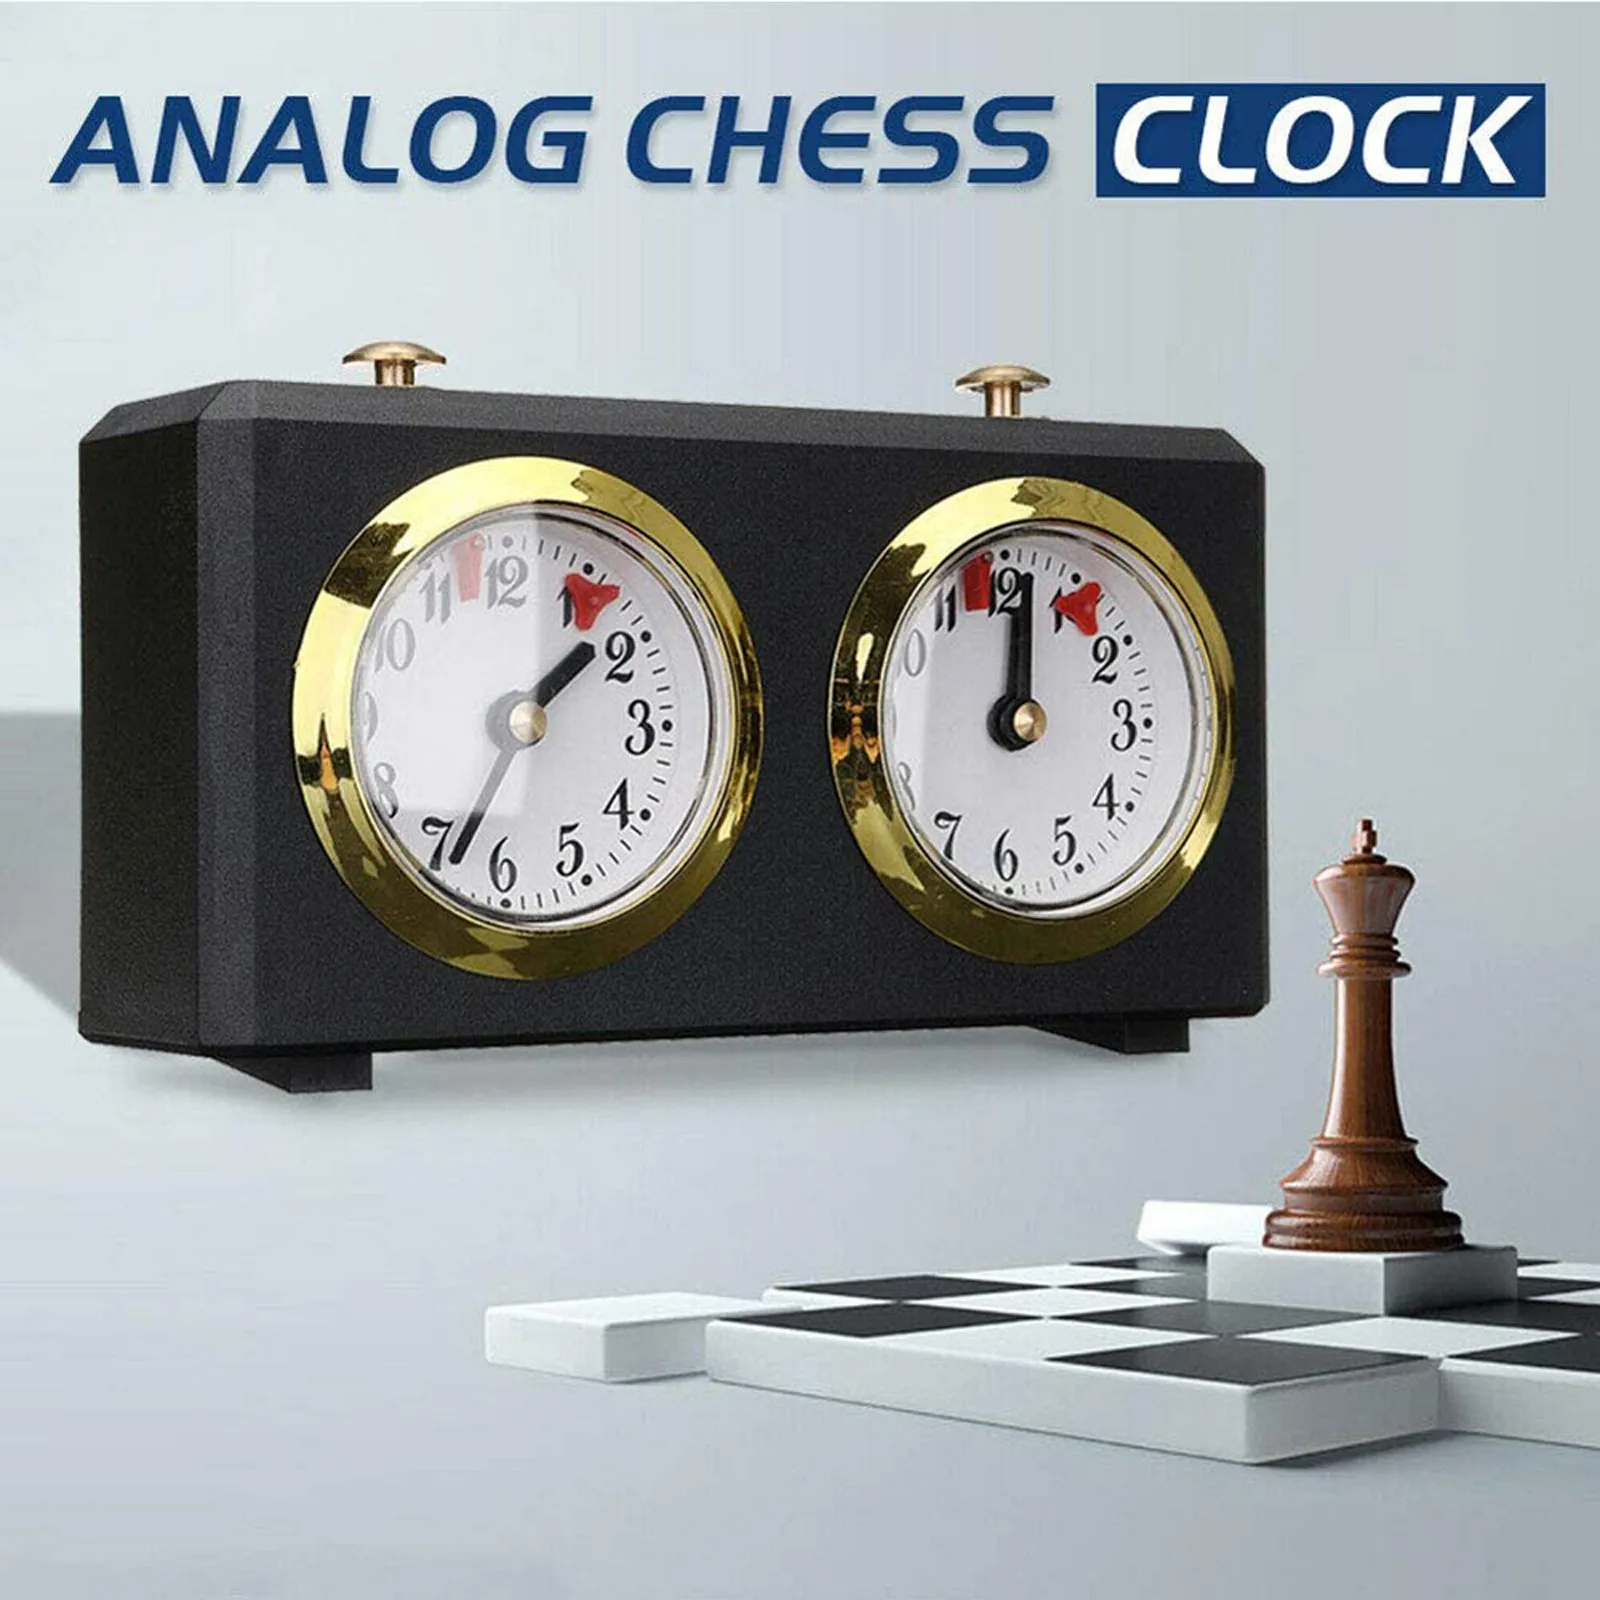 Chess clock size